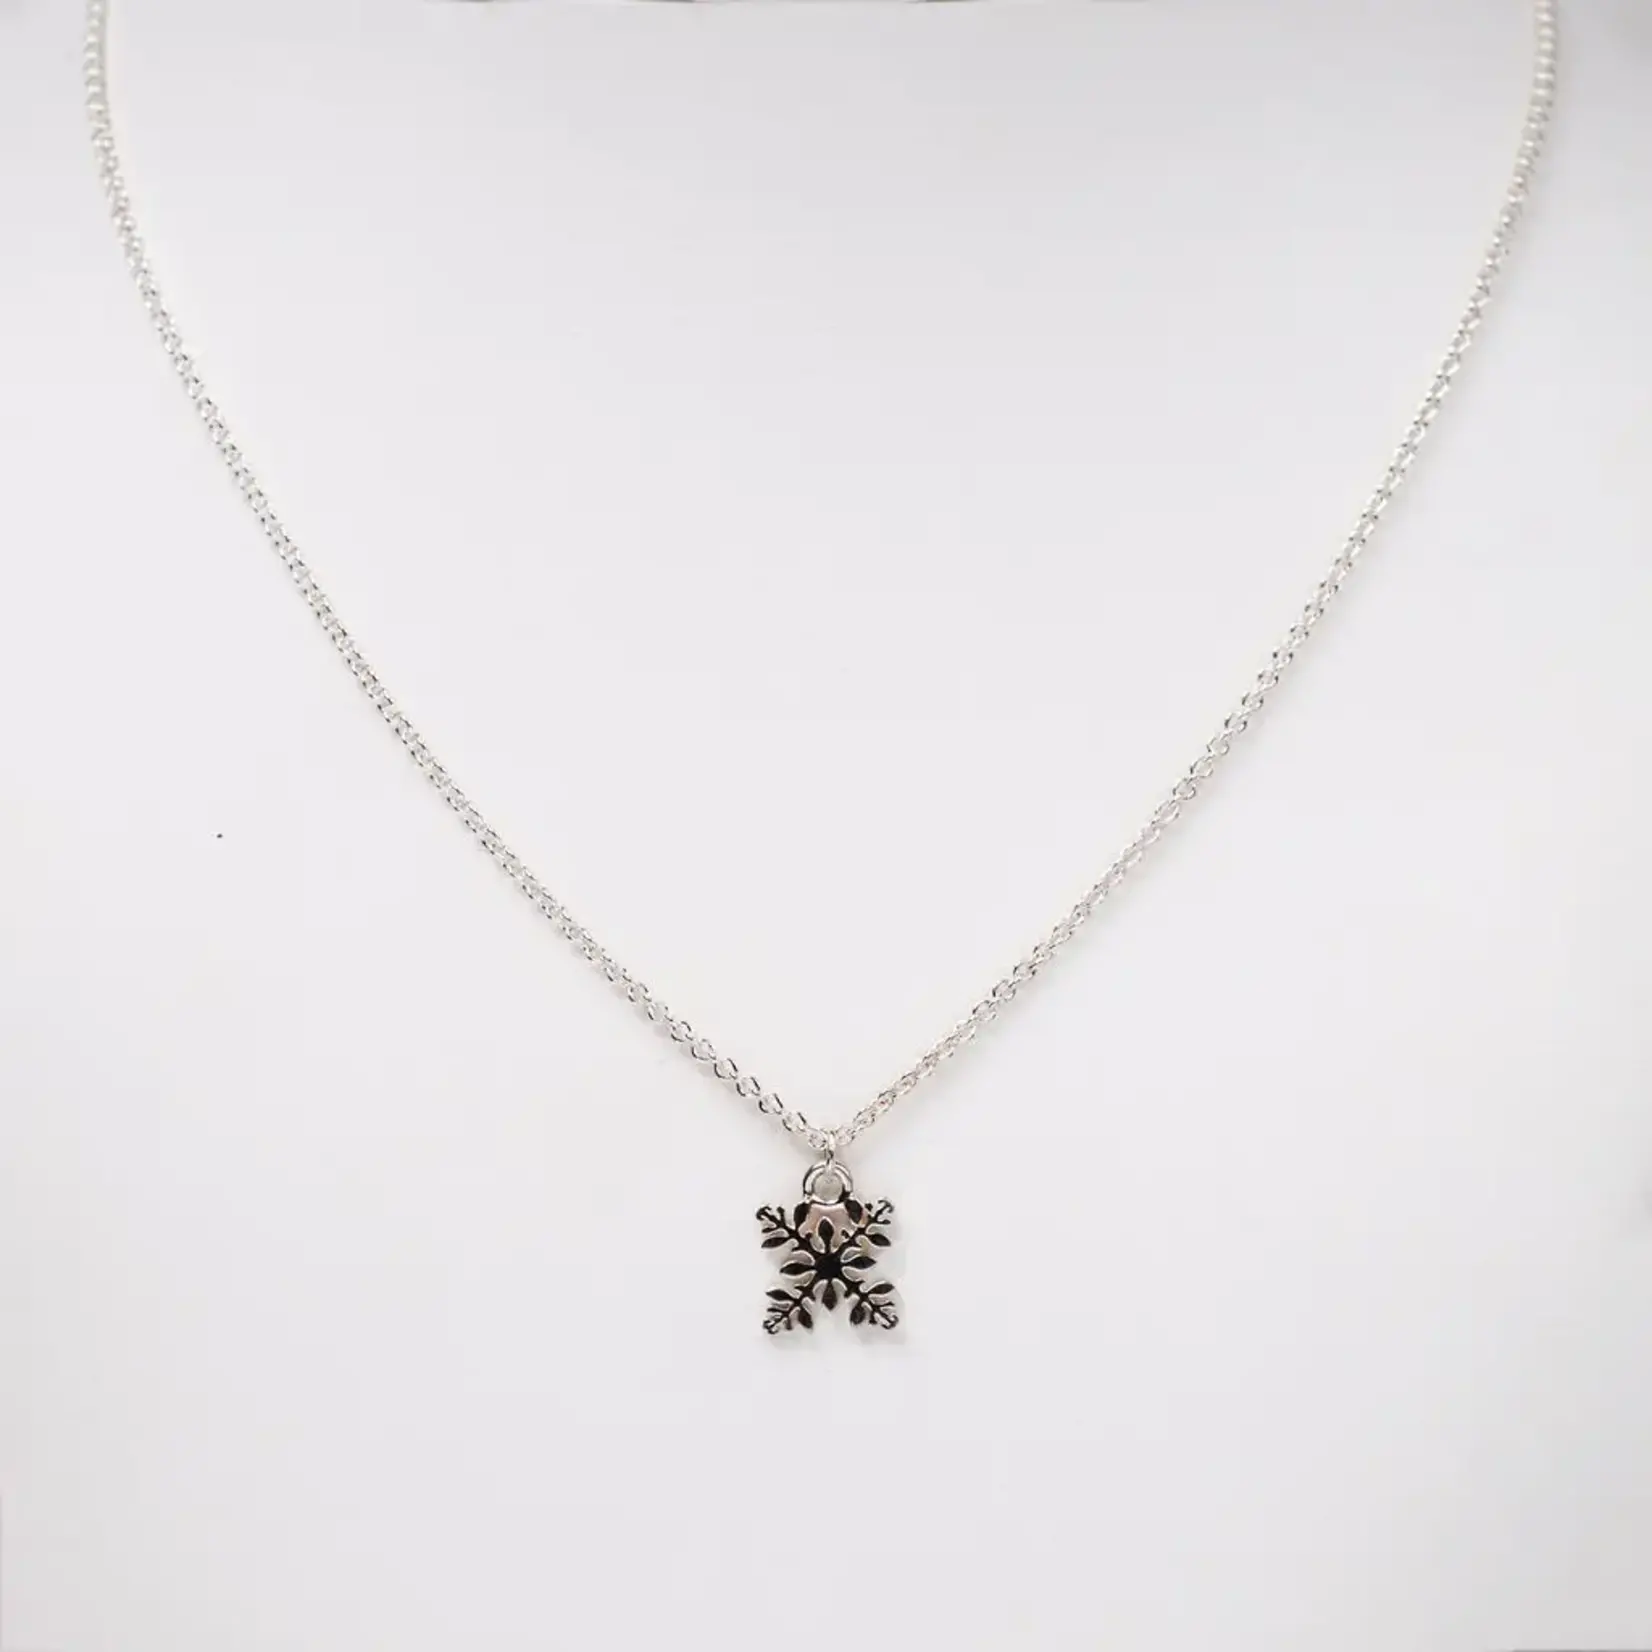 Laha'ole Designs Laha'ole Designs: Quilt Necklace-Puakenikeni- Sterling Silver w/chain